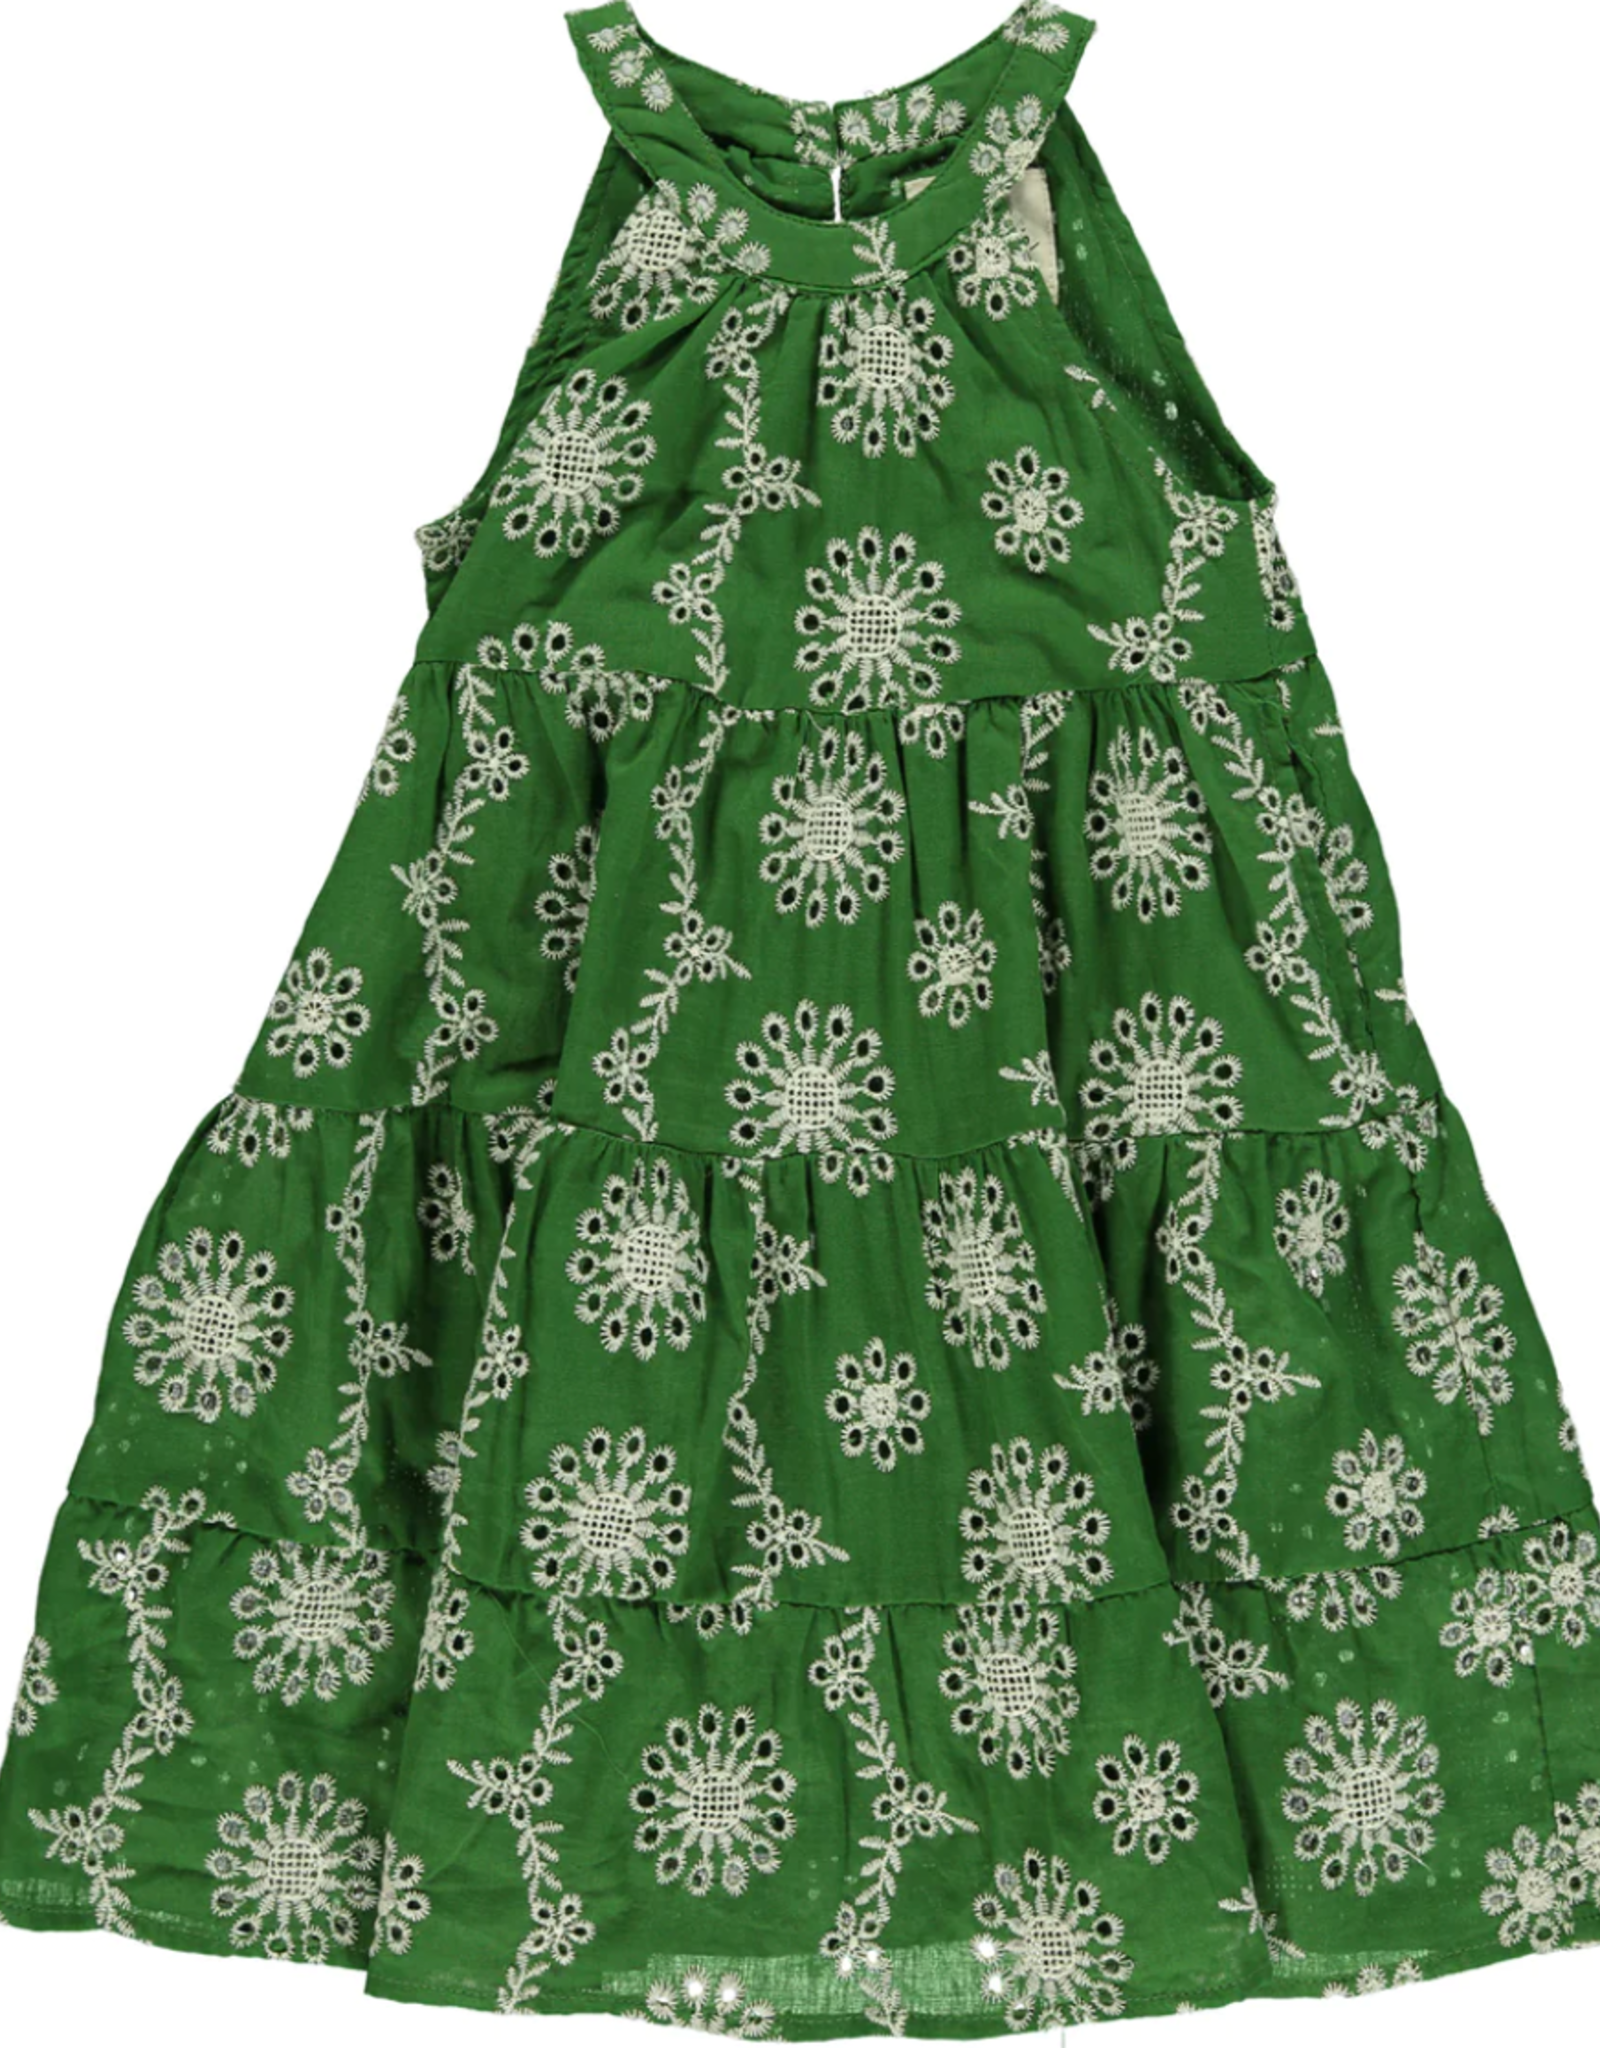 Vignette Maleia Dress, Green